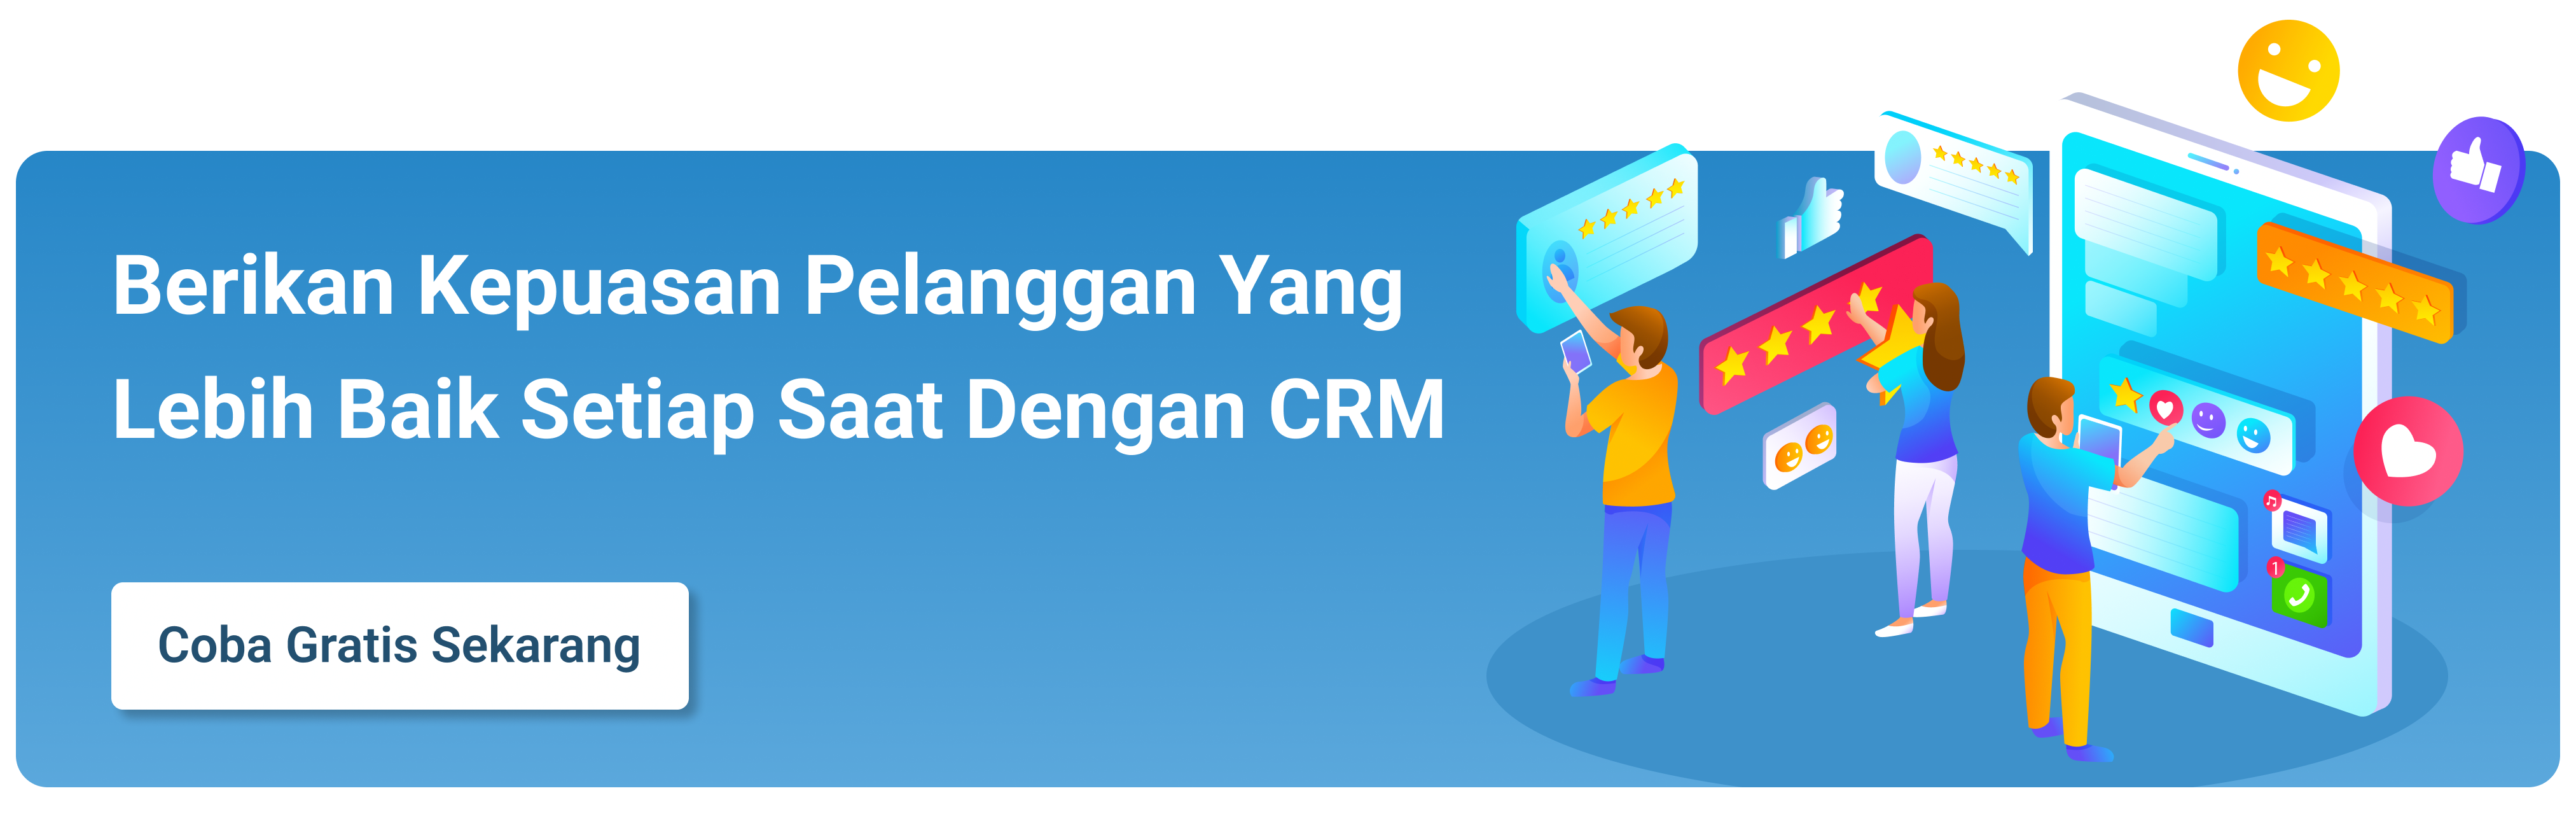 Barantum CRM - CRM, Chat & Call Center Software Terbaik